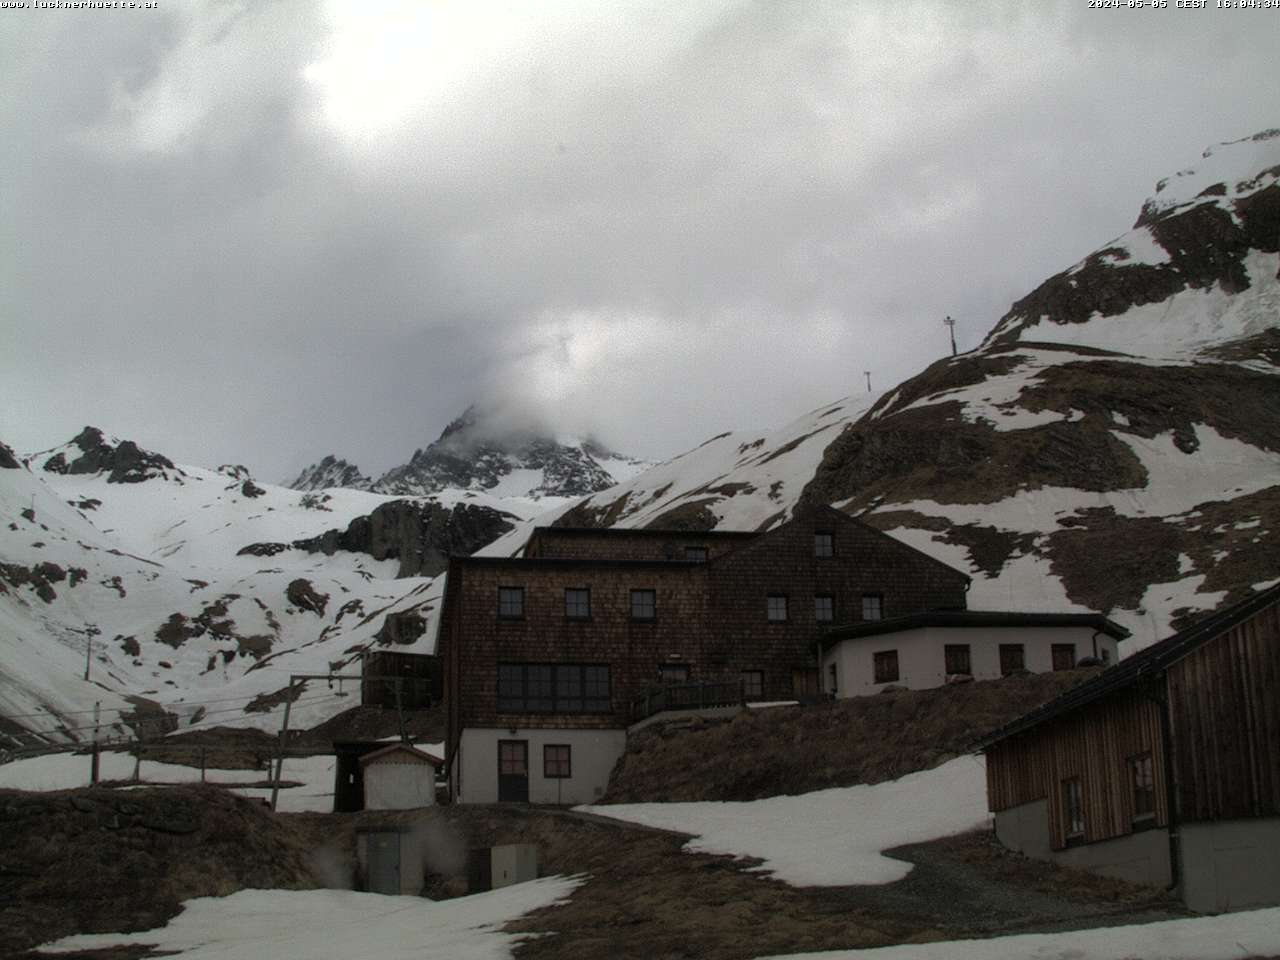 Webcams Osttirol: Wetter und Livebild Lucknerhütte, Livecam und Webcam Lucknerhütte - 2241 Meter Seehöhe